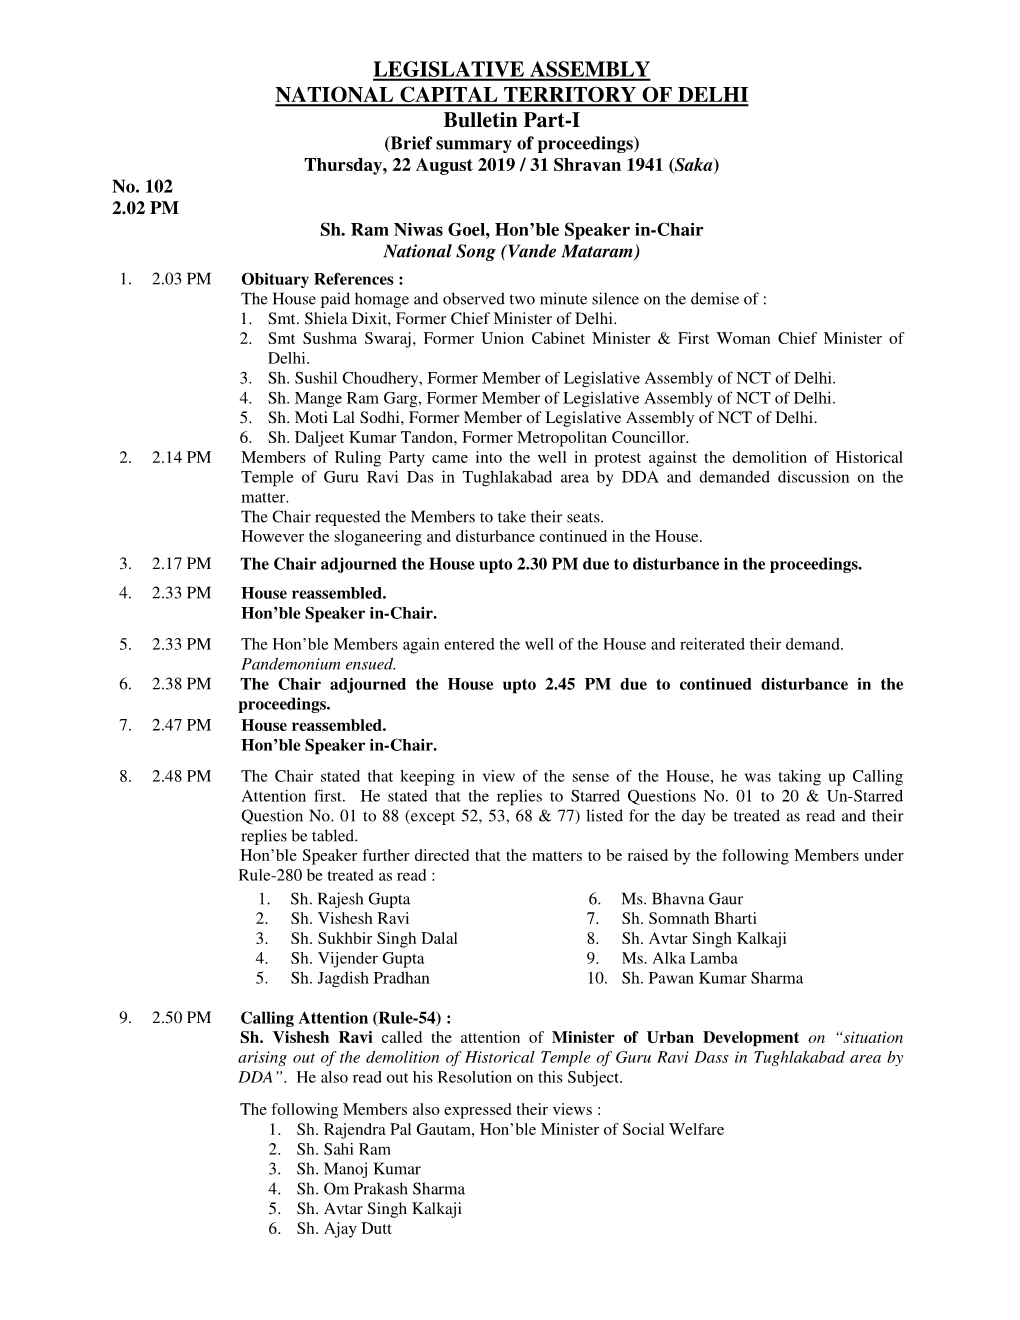 LEGISLATIVE ASSEMBLY NATIONAL CAPITAL TERRITORY of DELHI Bulletin Part-I (Brief Summary of Proceedings) Thursday, 22 August 2019 / 31 Shravan 1941 (Saka ) No